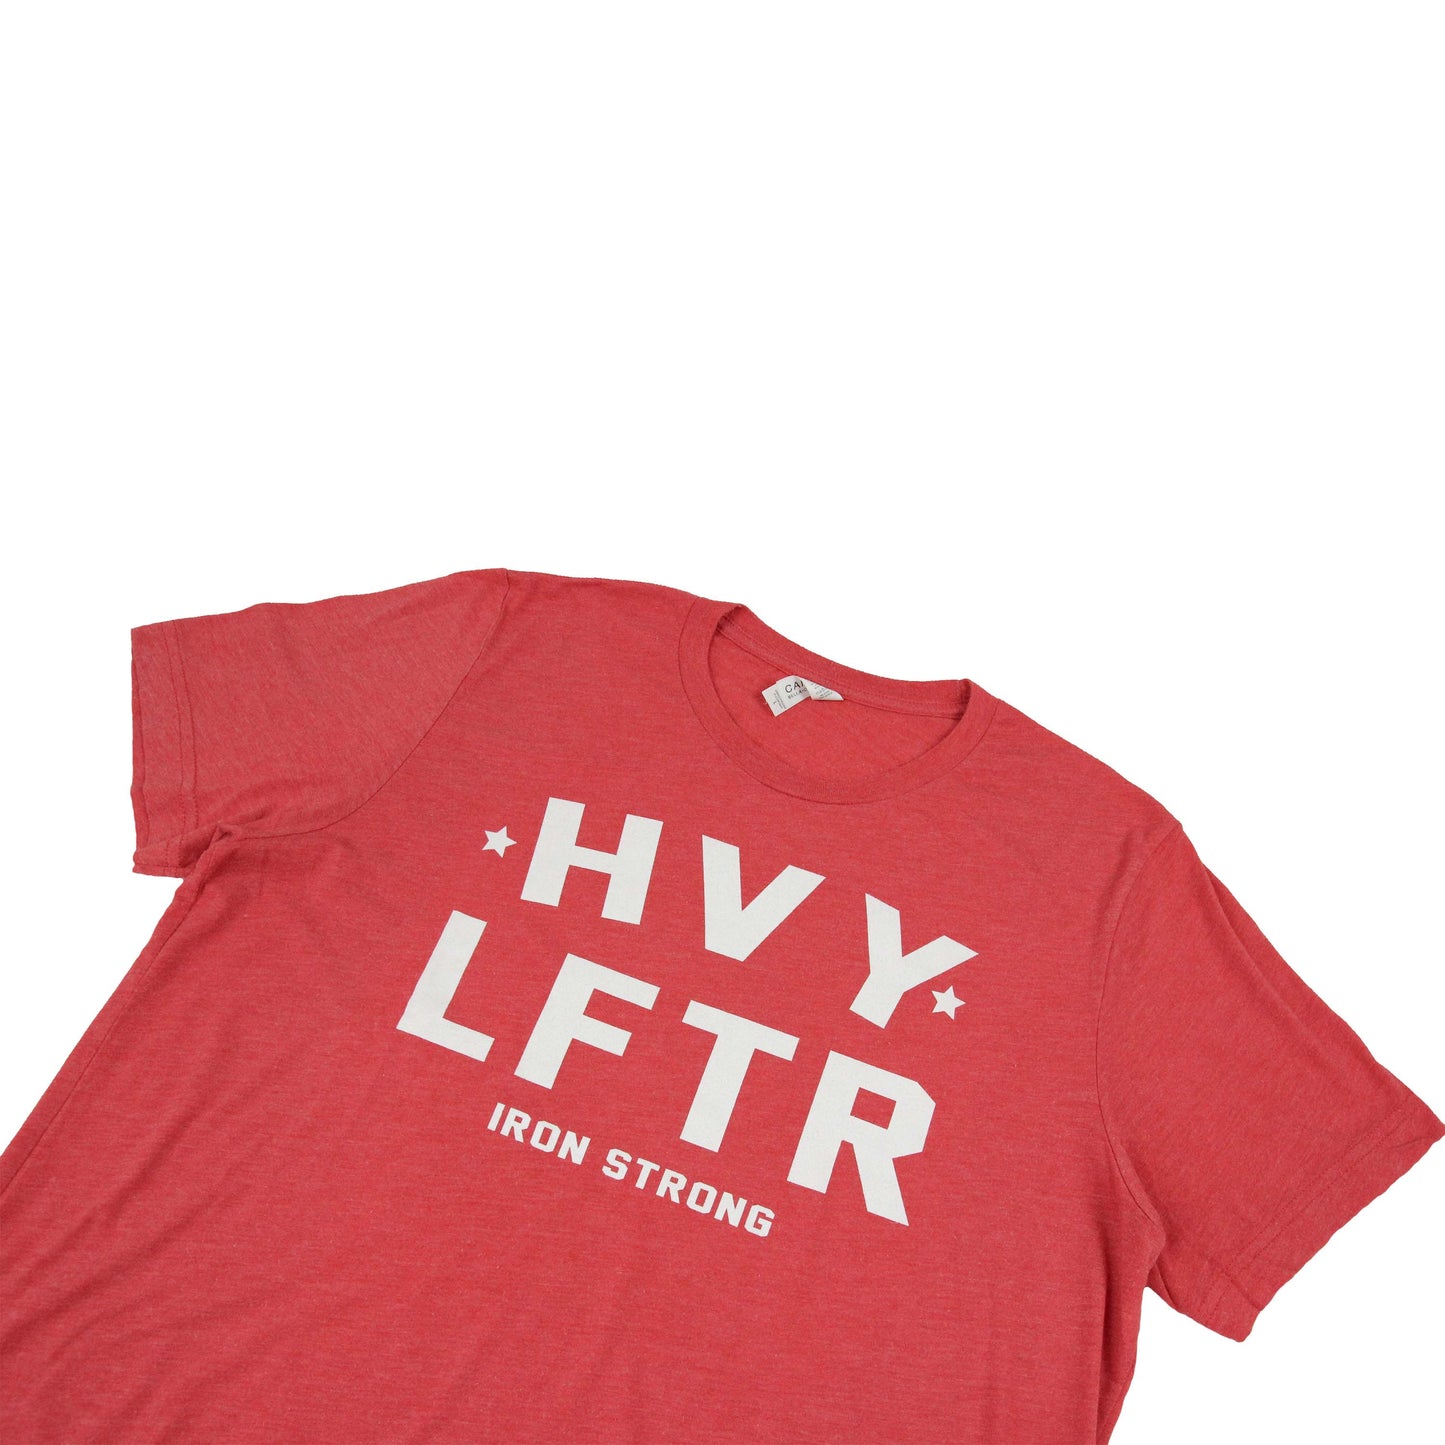 The 'HVY LFTR' weightlifting shirt | Iron Strong Apparel